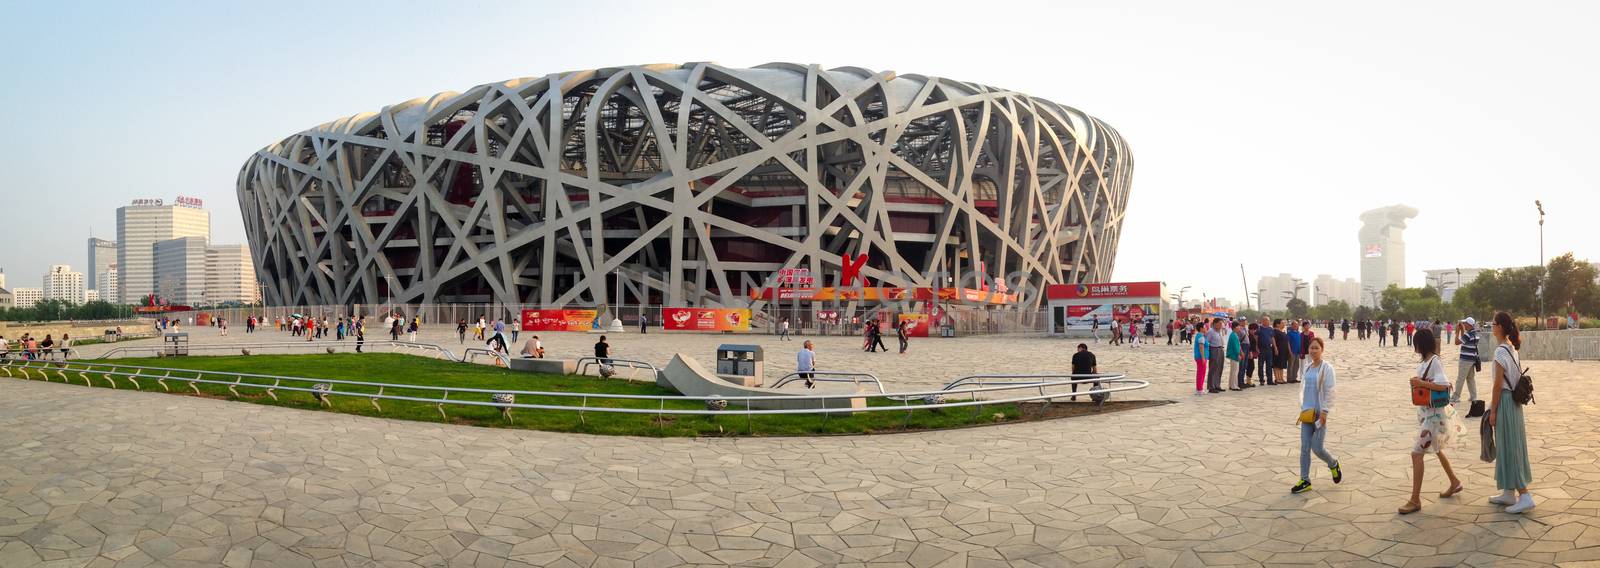 Beijing National Olympic Stadium by hlehnerer